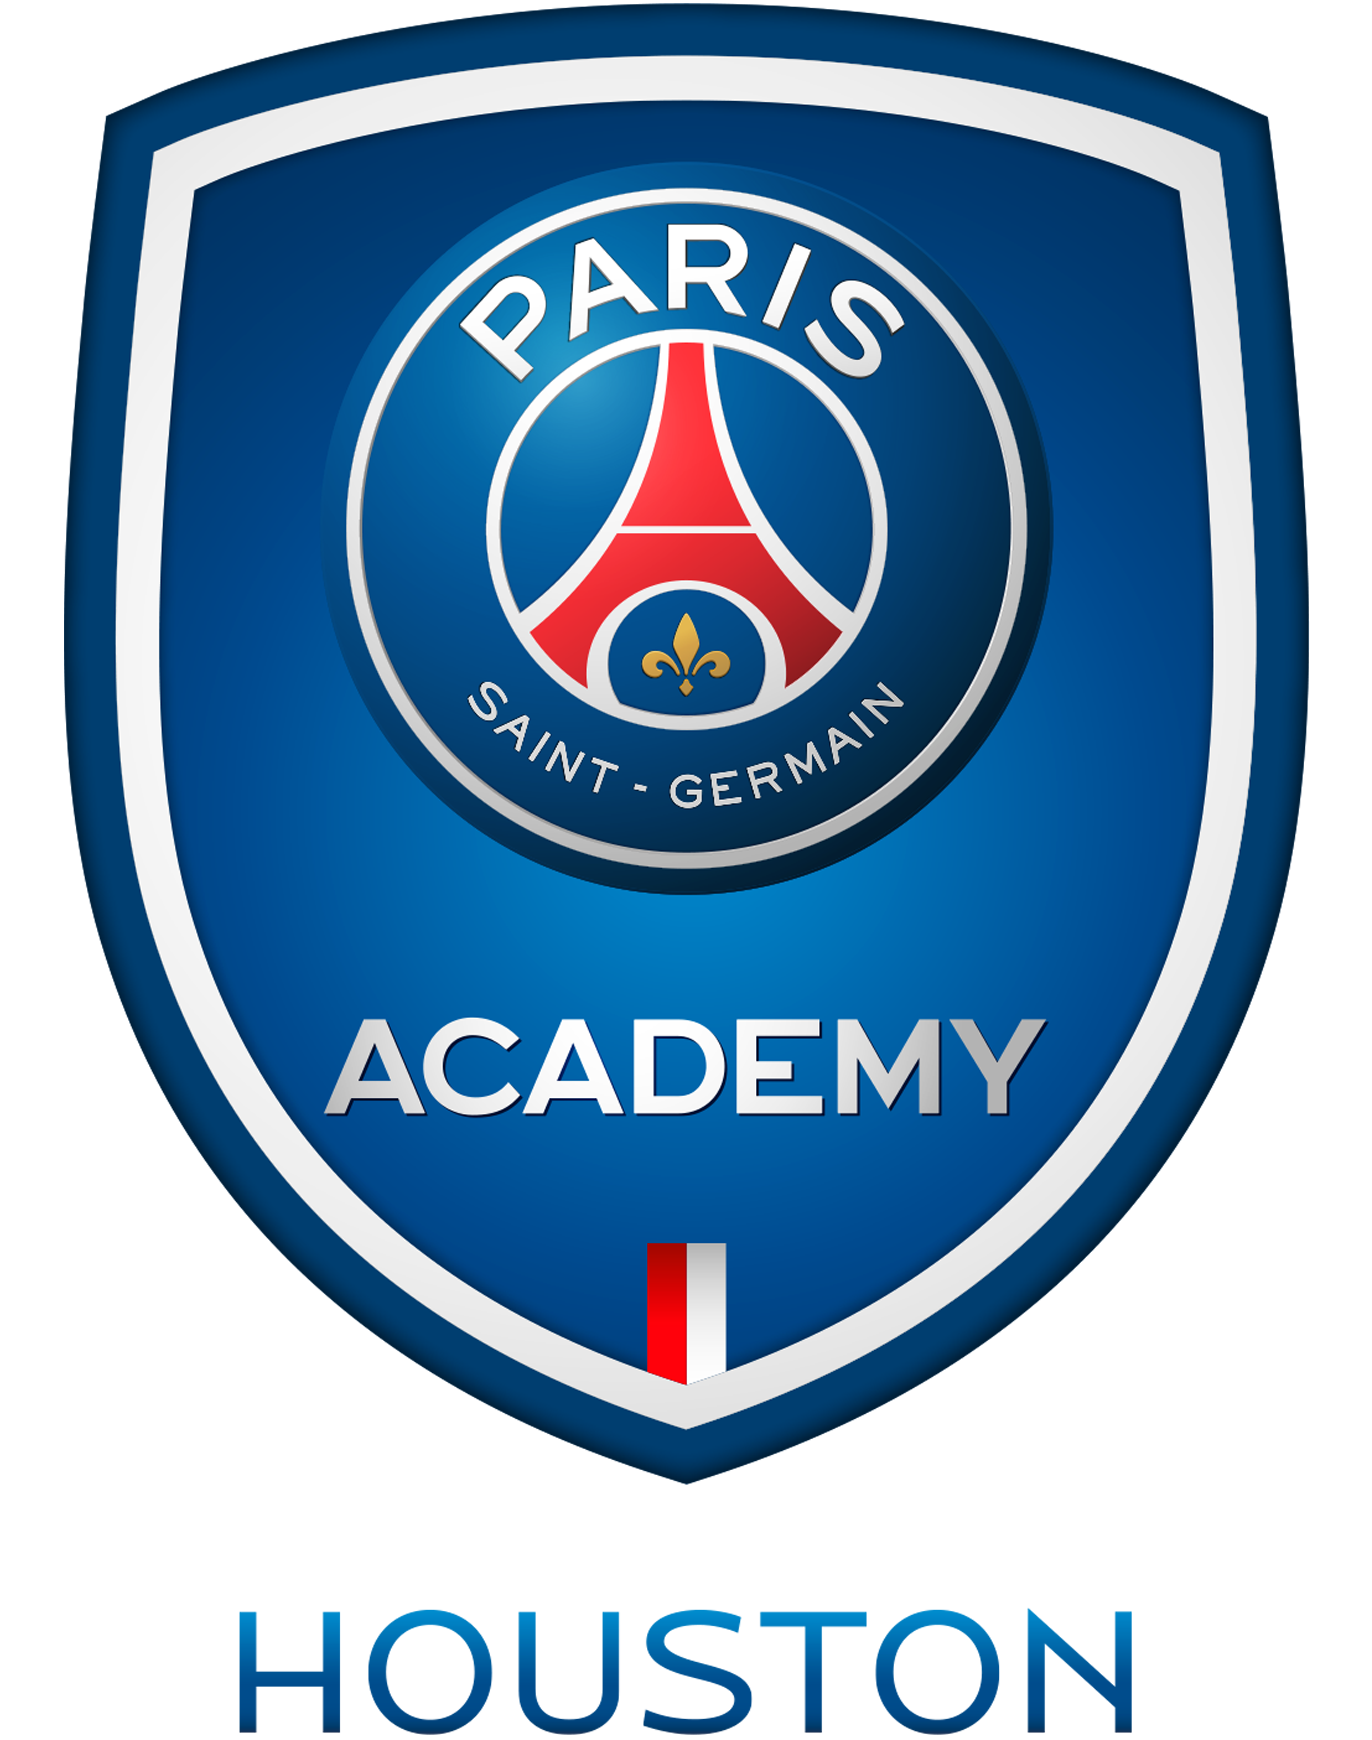 Paris SaintGermain Academy Houston, #1 Soccer Club